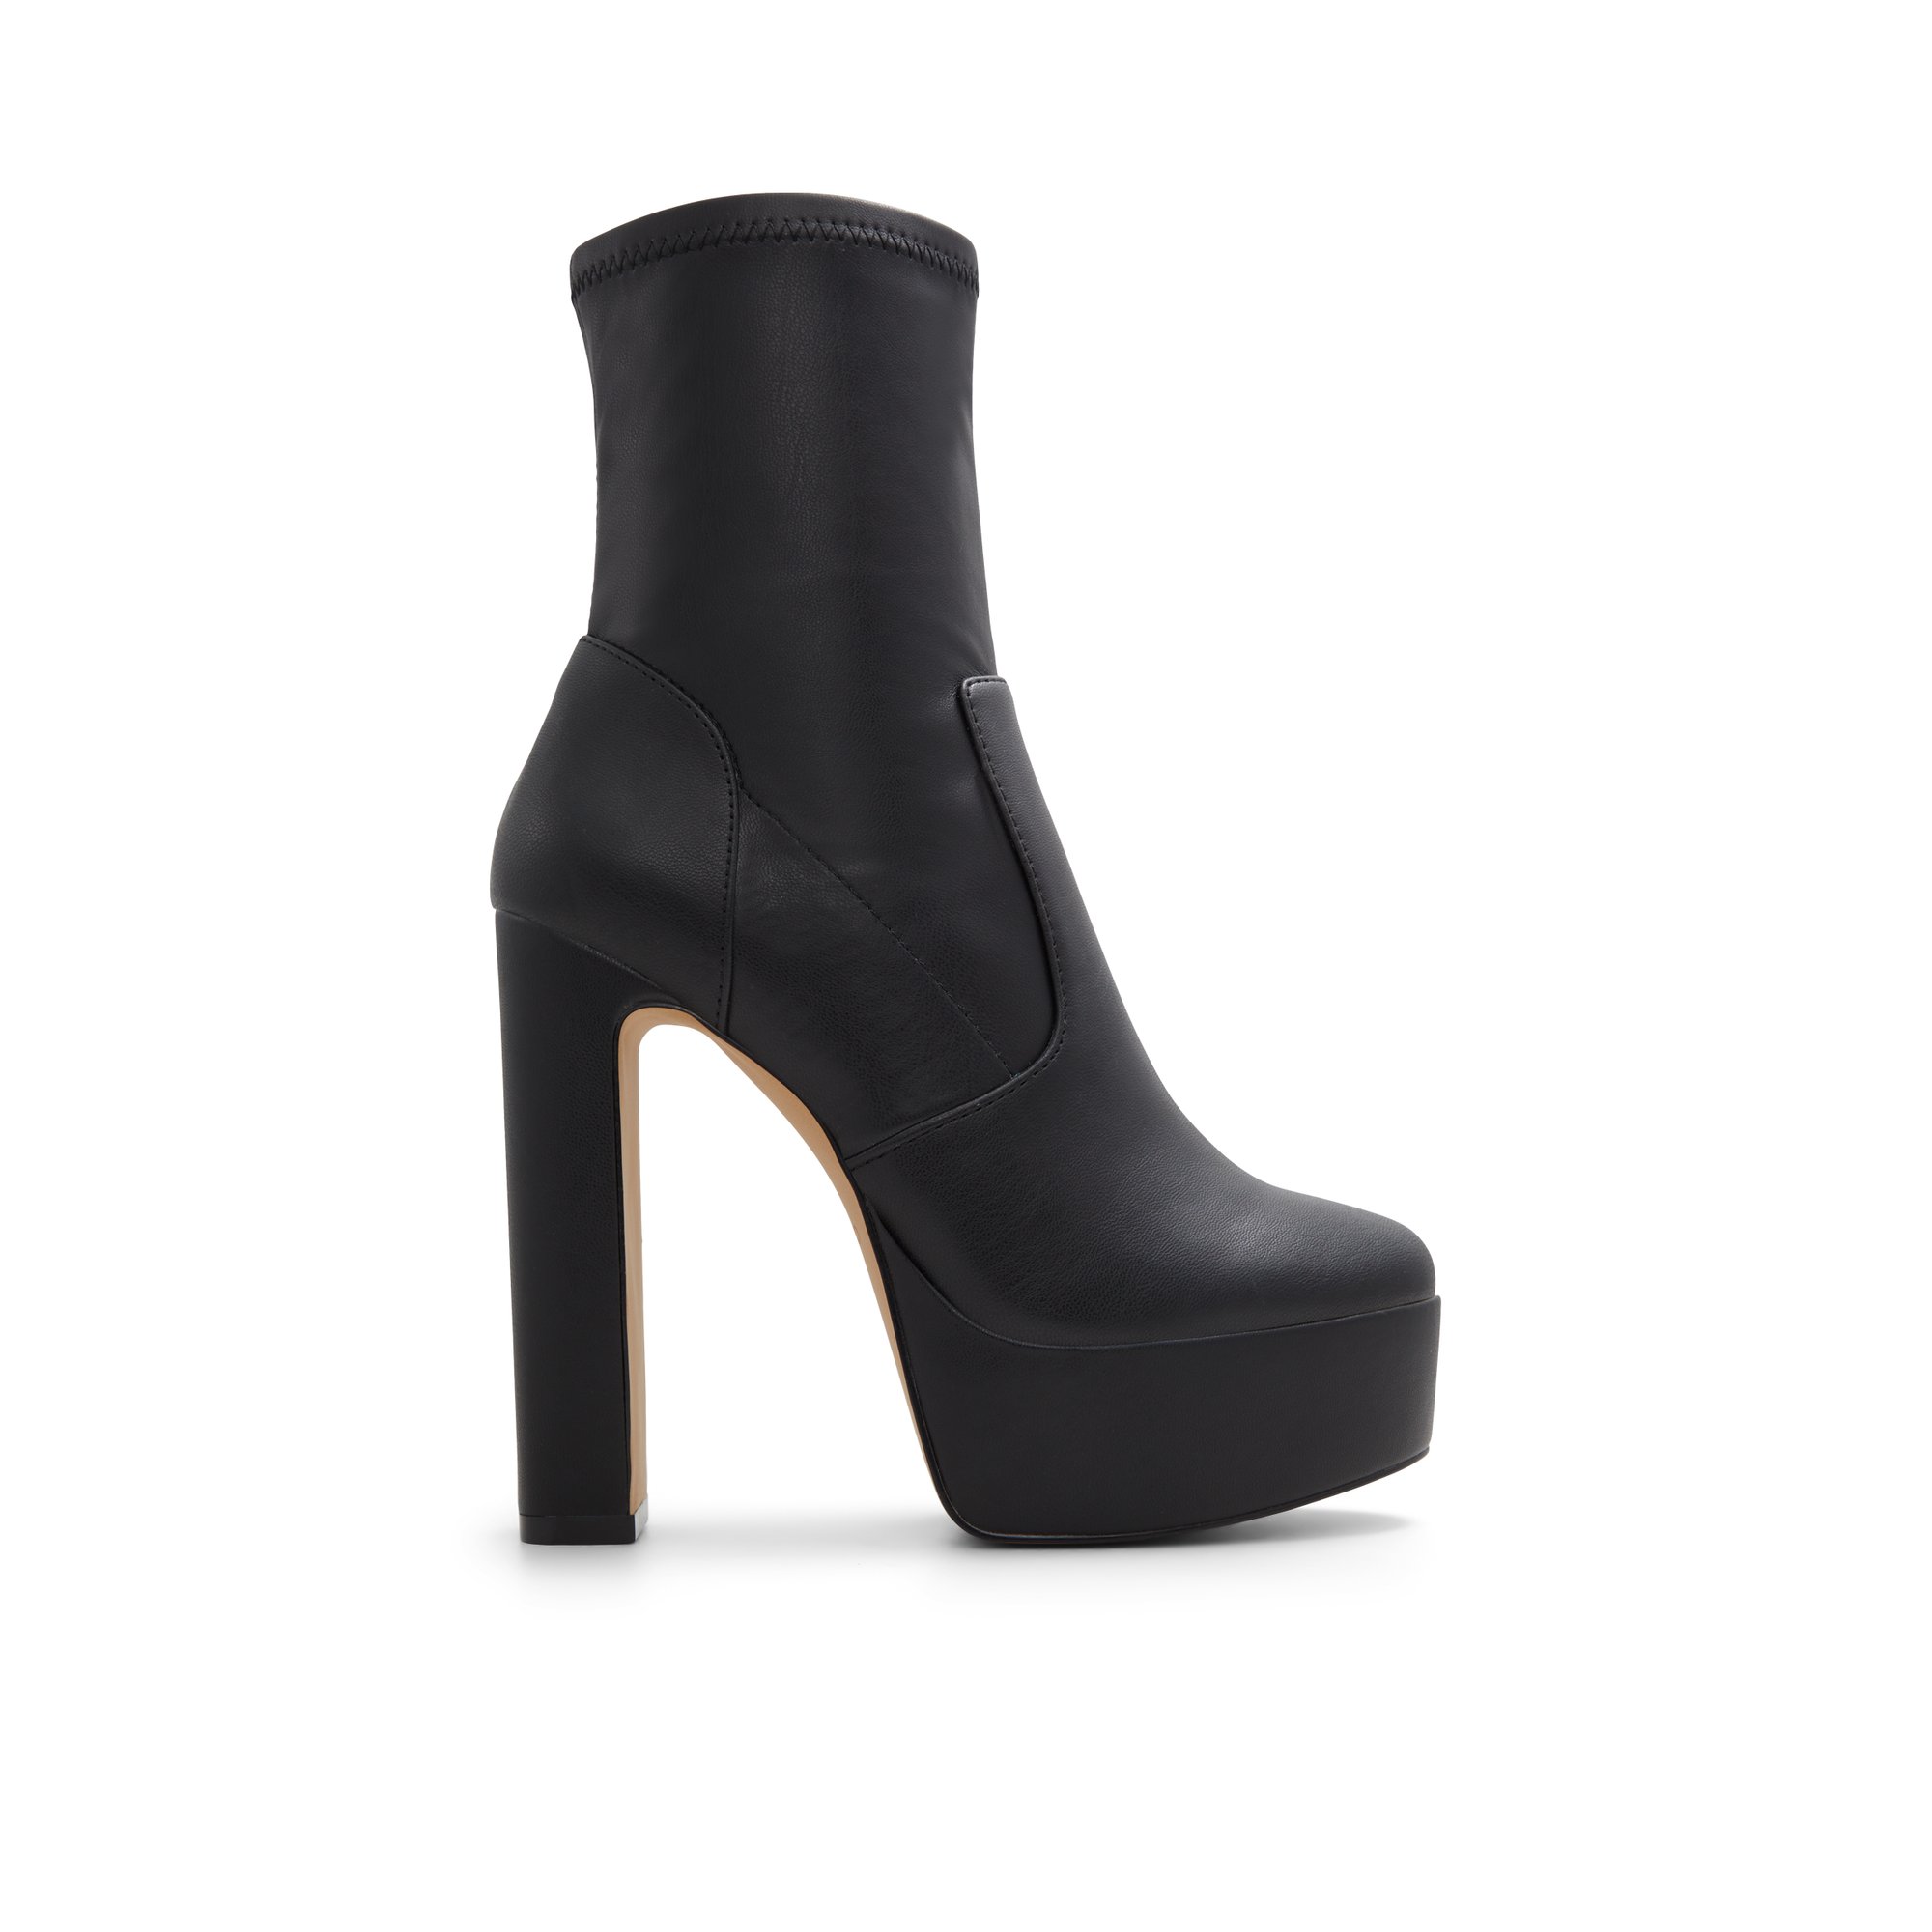 ALDO Brejar - Women's Boots Dress - Black